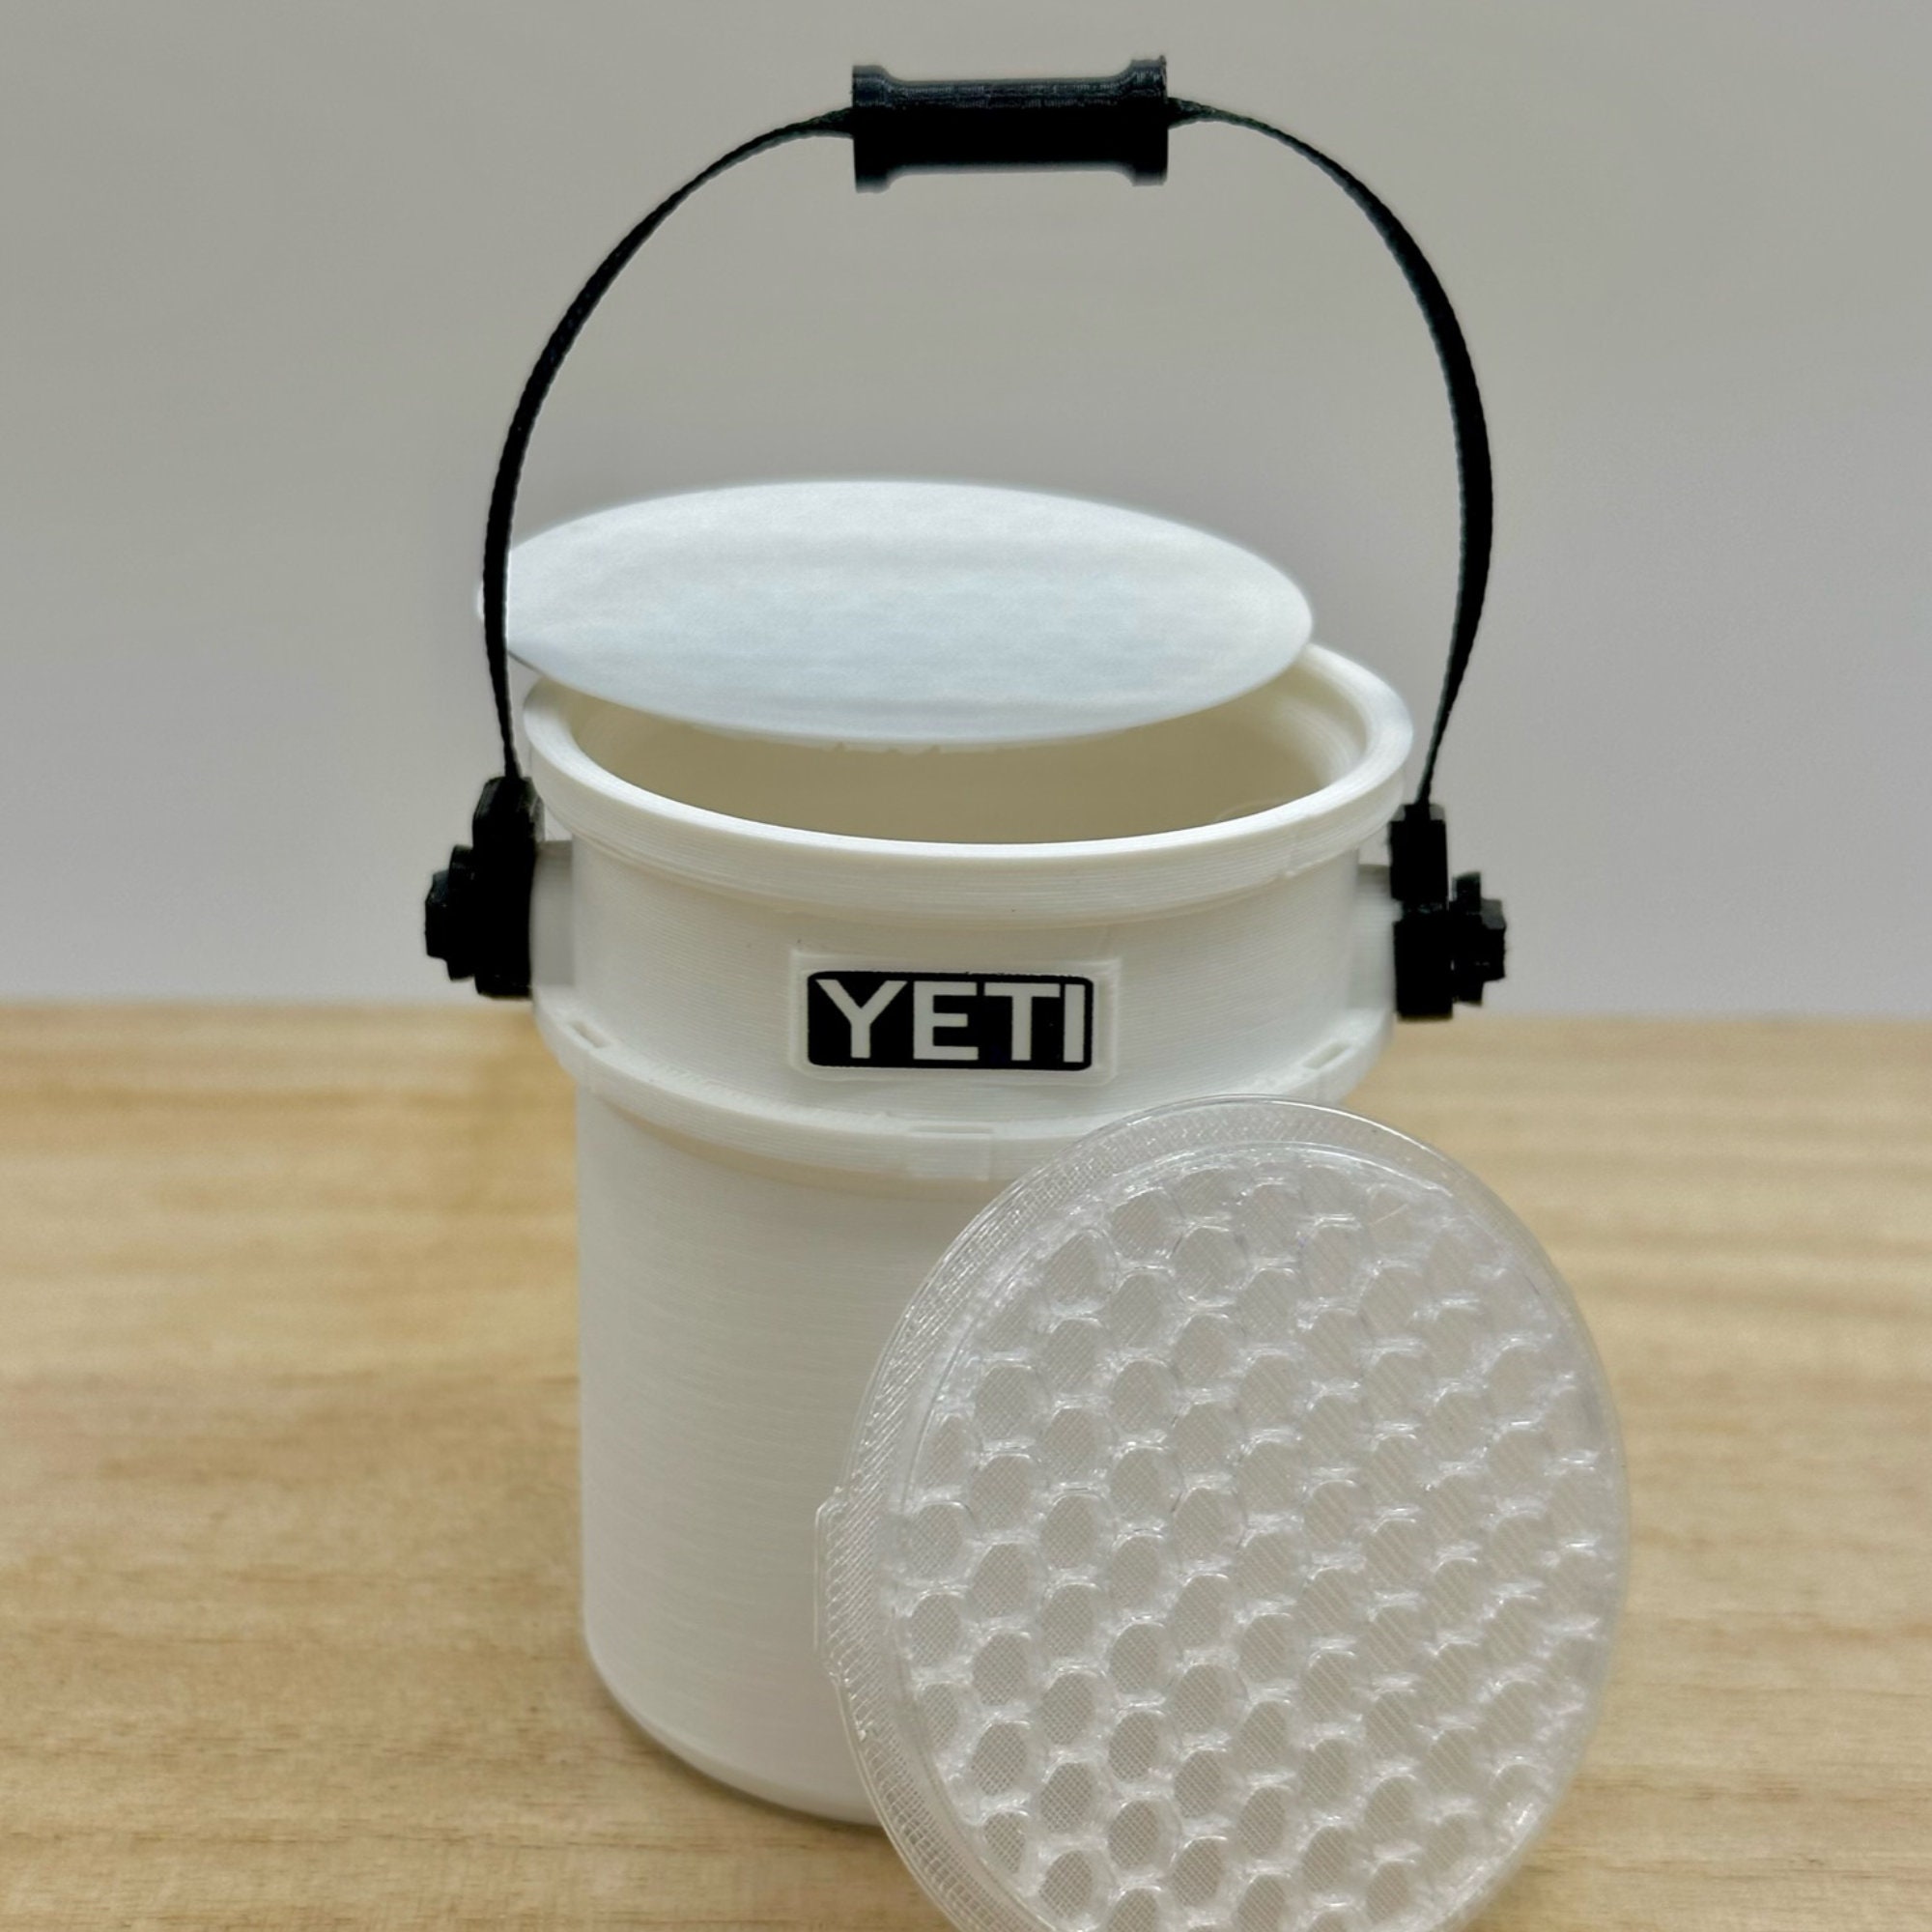 NEW YETI Mini Miniature 3D Printed Cooler YETI Fan Desk Accessory 2.5x1.5  FUN!